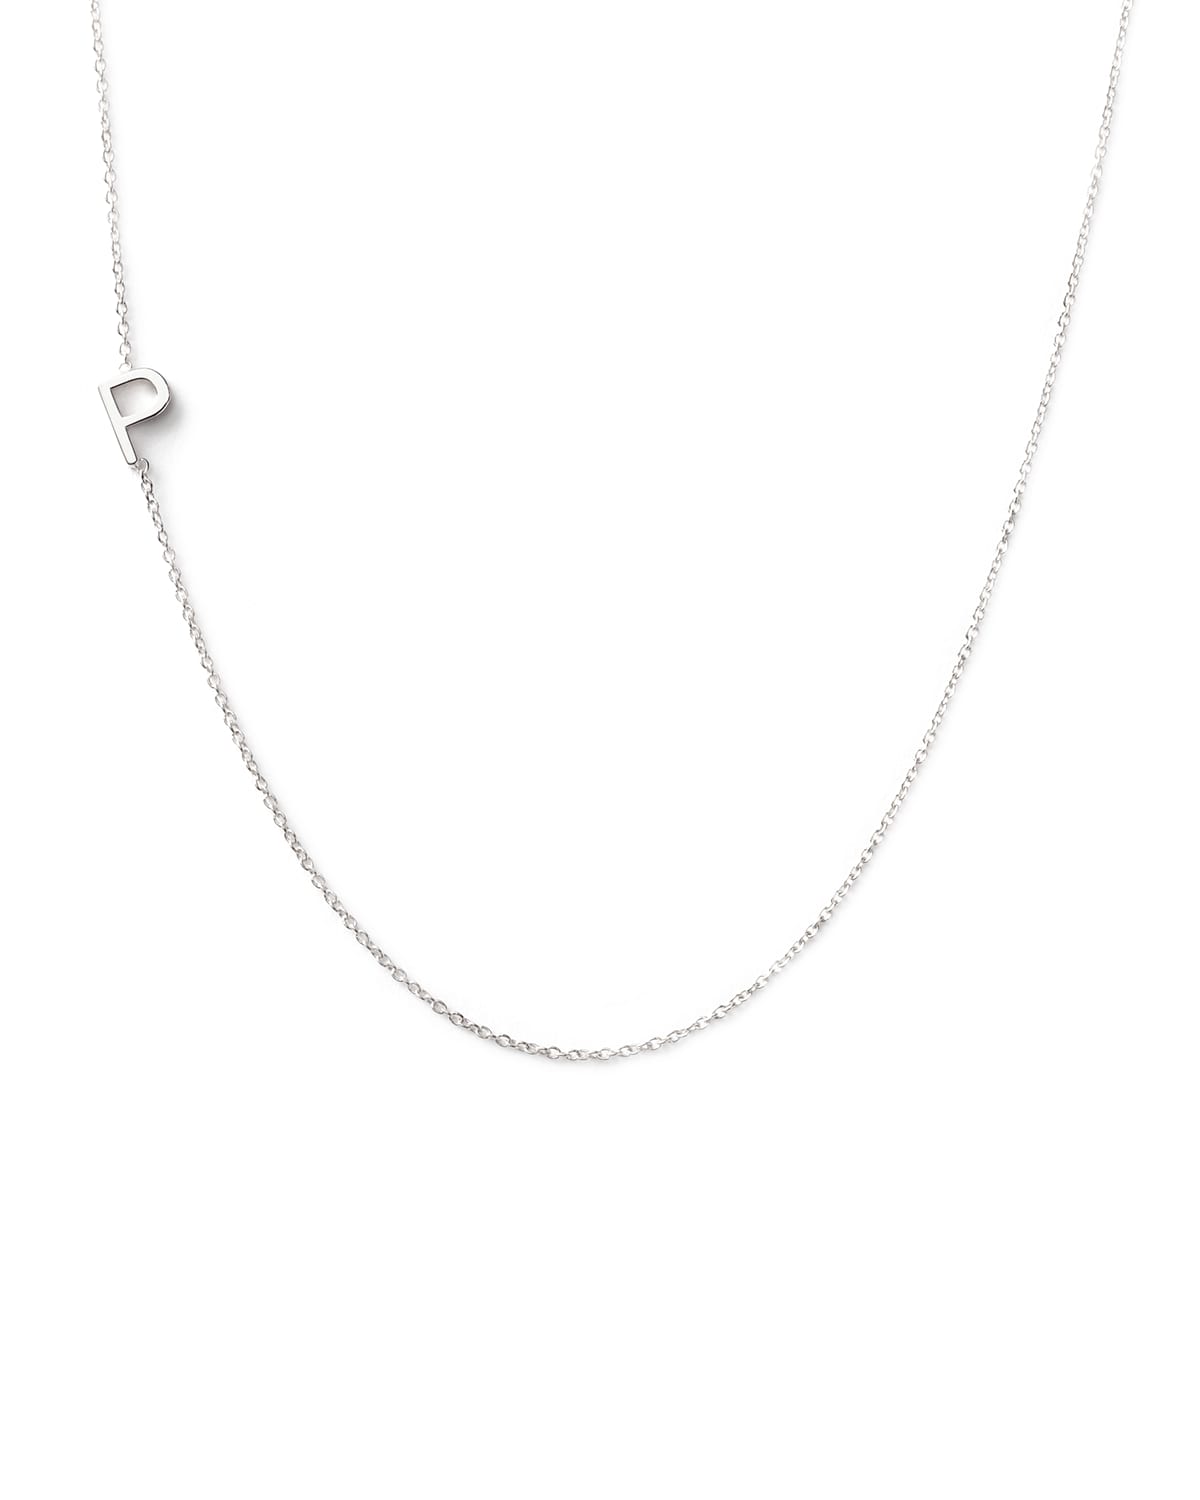 Maya Brenner Designs 14k White Gold Mini Letter Necklace In P